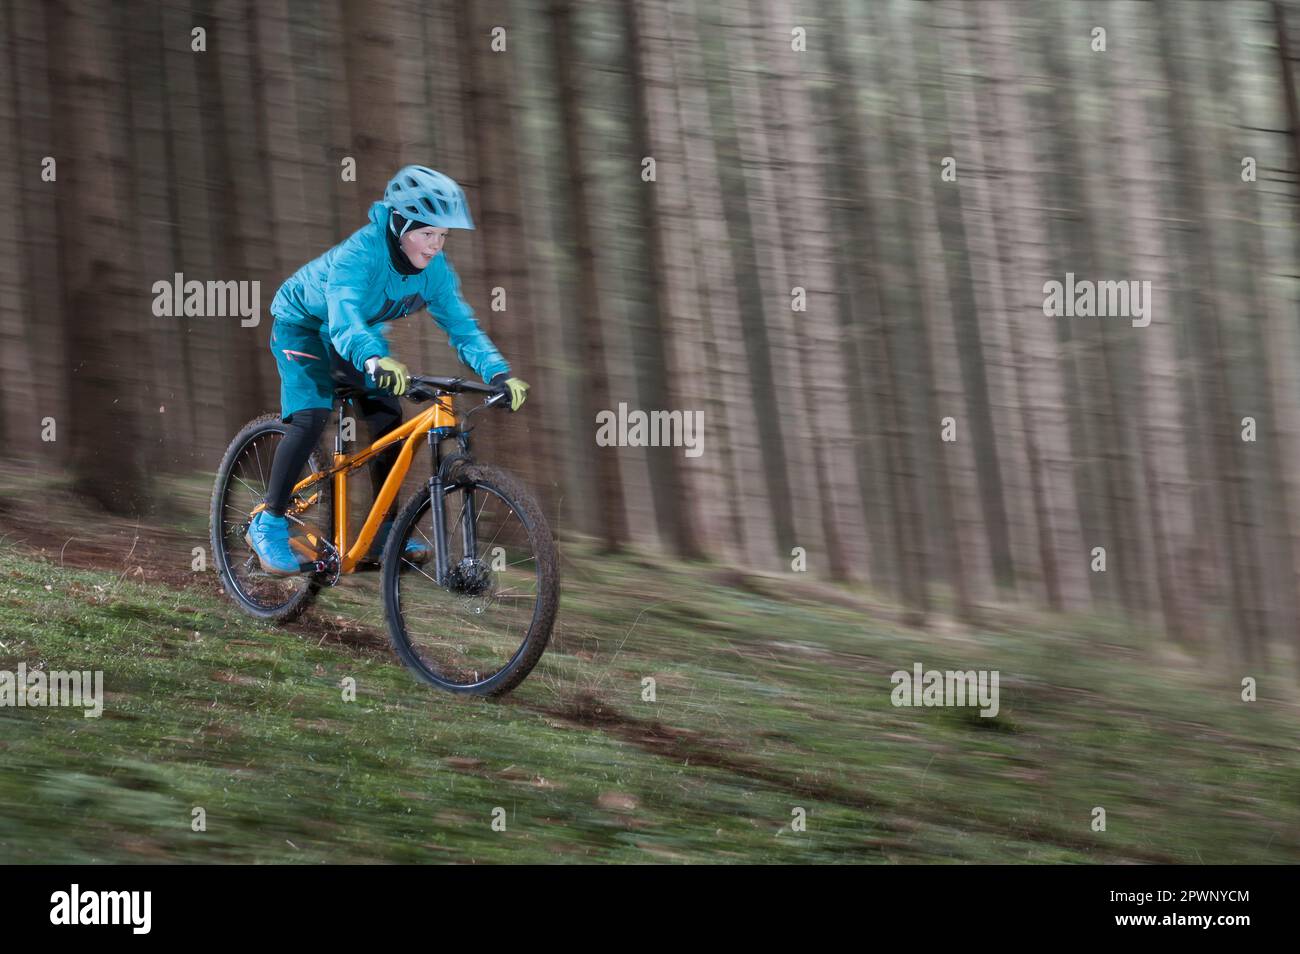 Boy riding mountain bike downhill through forest Stock Photo